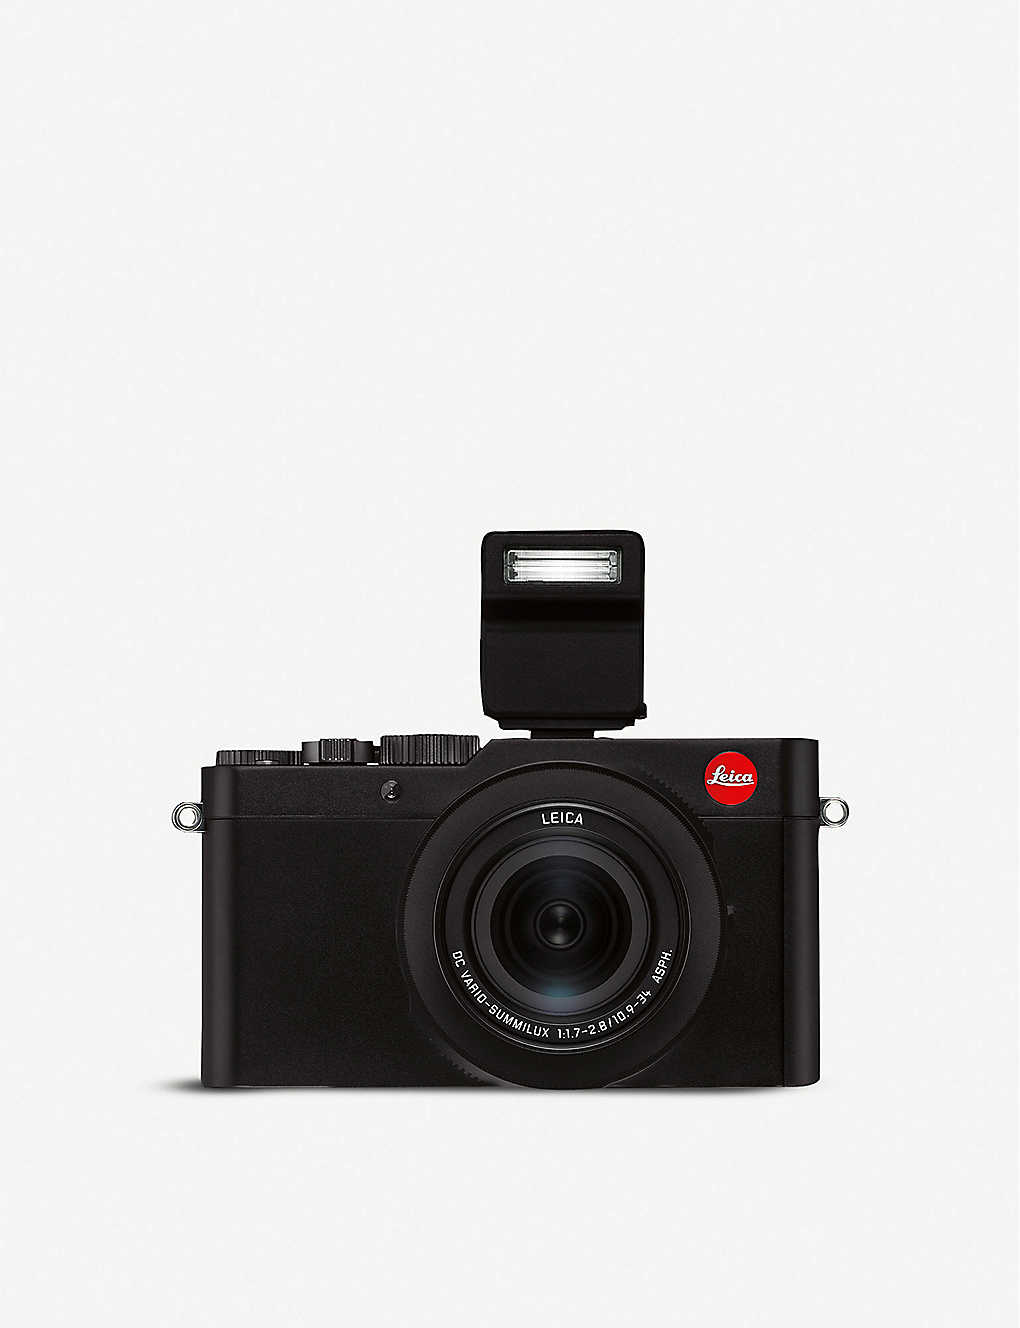 Black Leica D-Lux 7 Digital Camera 